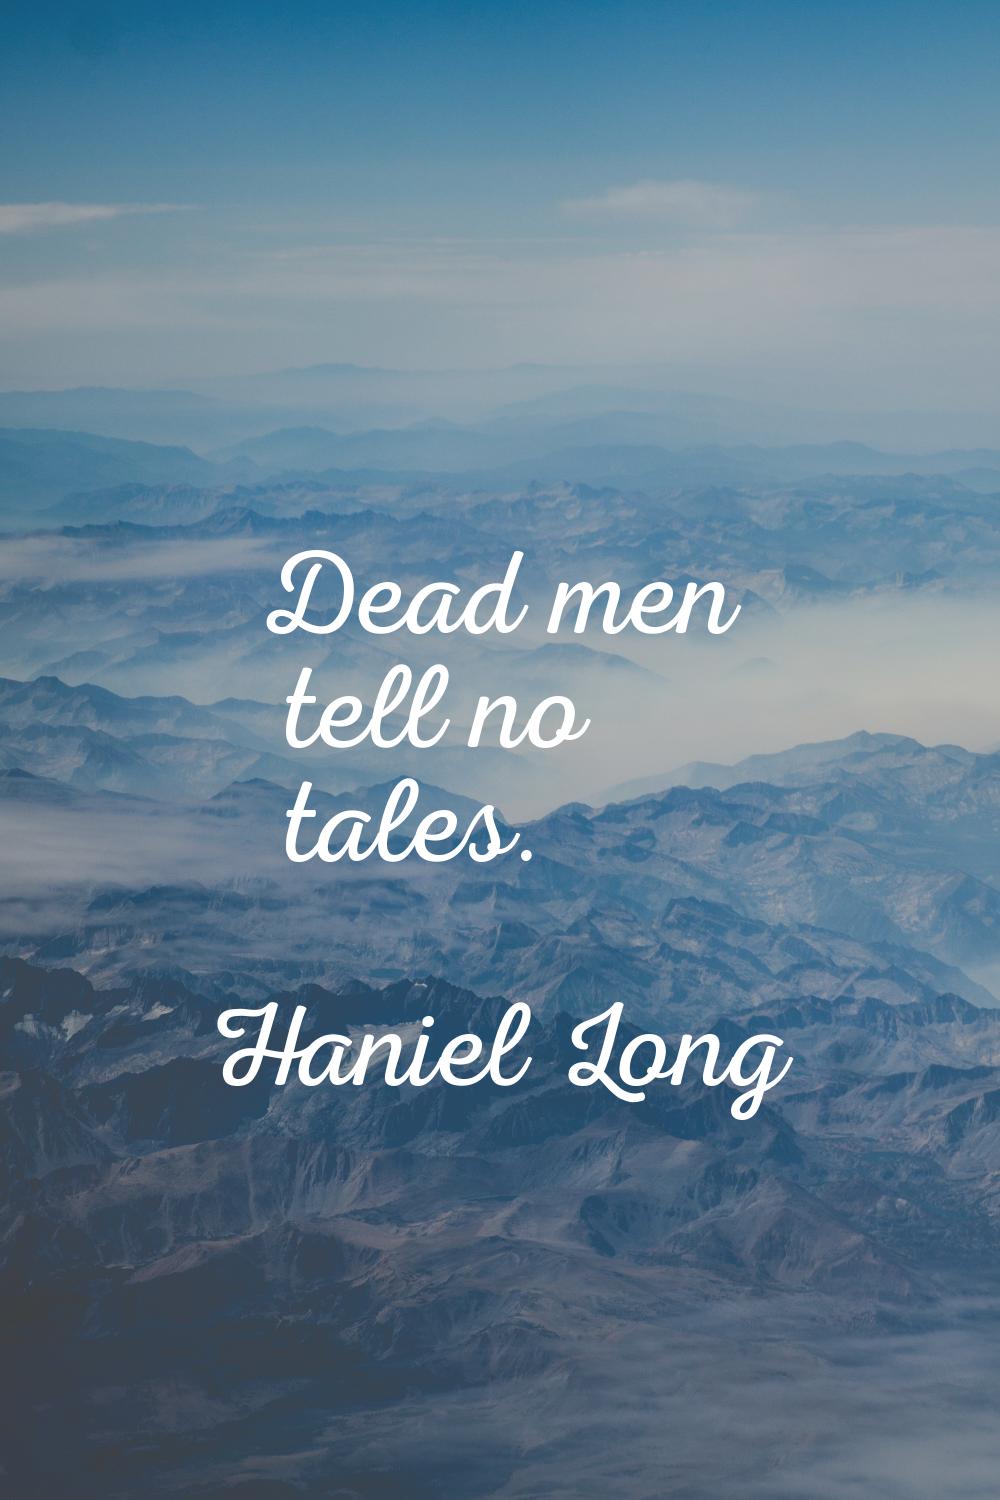 Dead men tell no tales.